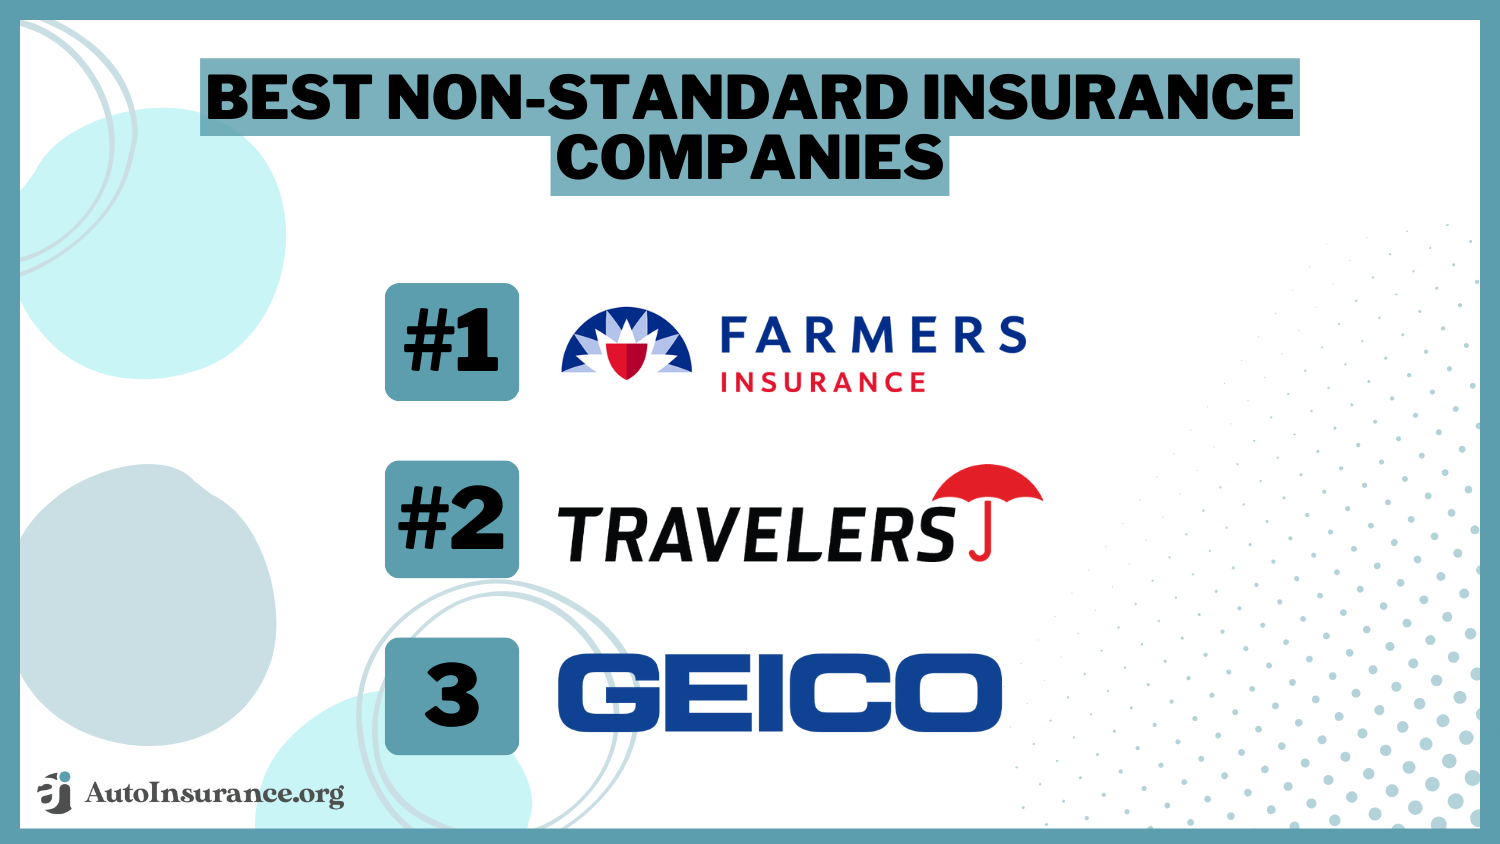 best non-standard insurance companies: Farmers, Travelers, Geico